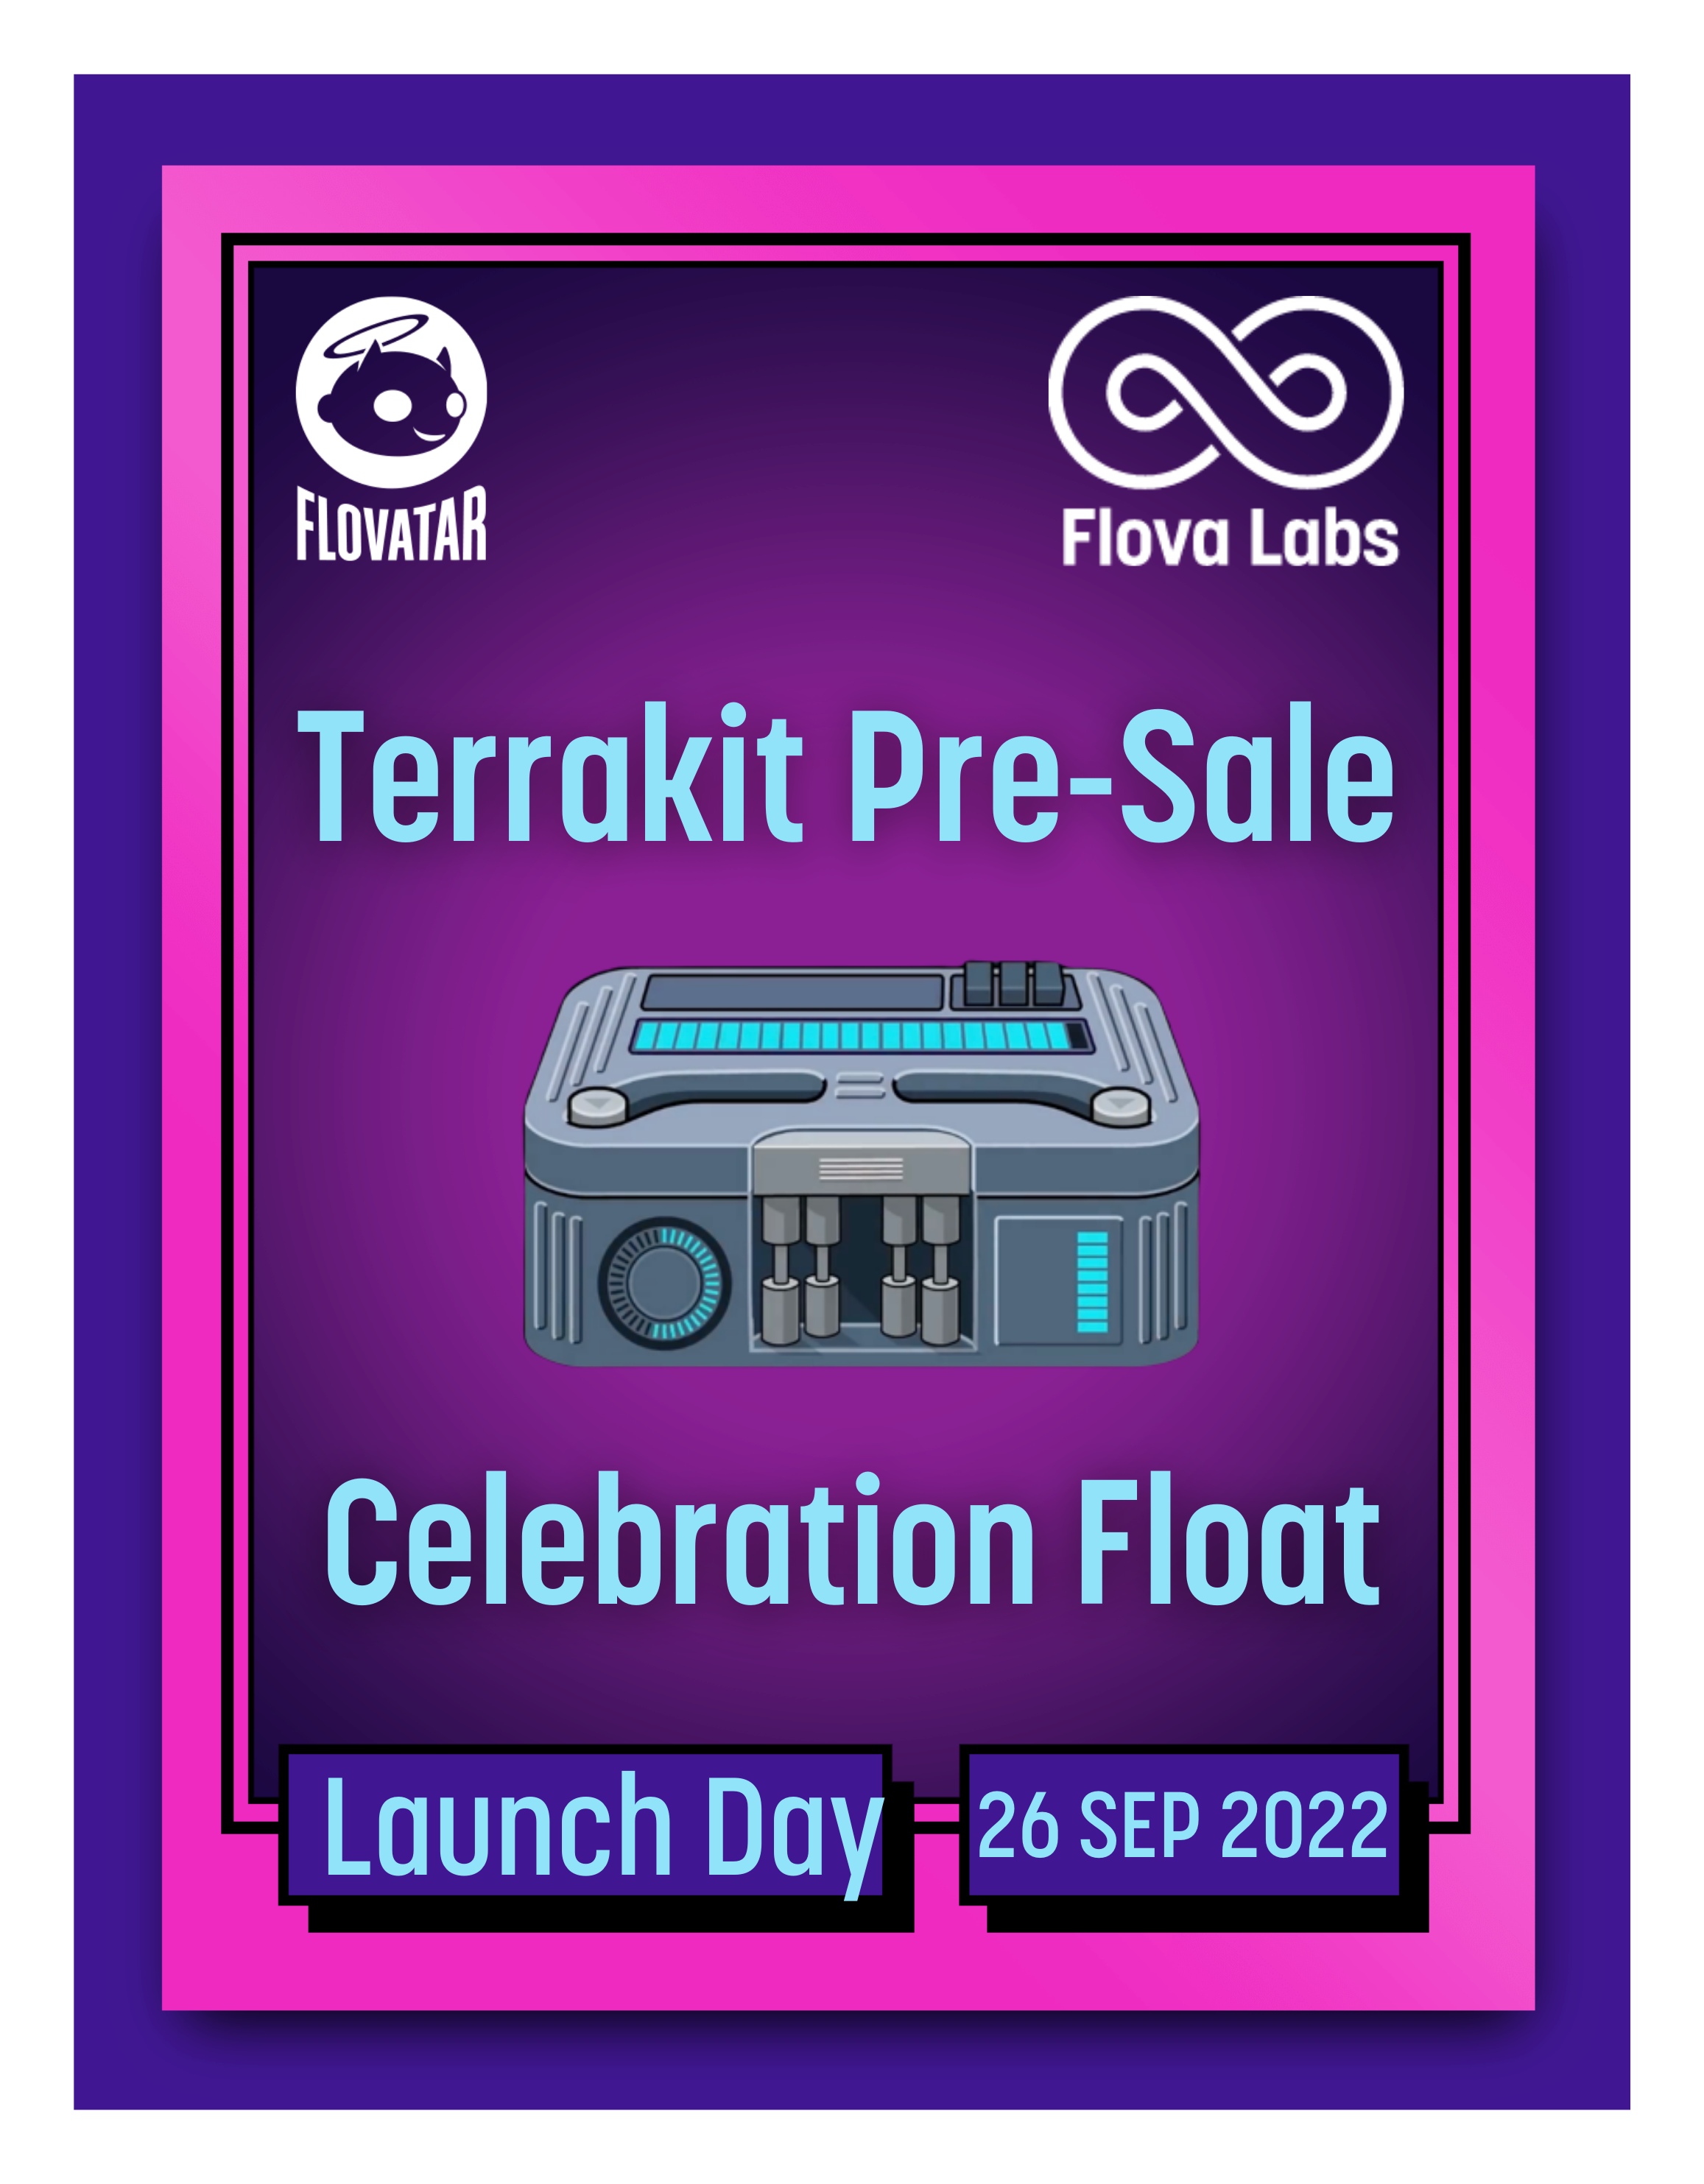 Terrakit Pre-Sale Celebration asset